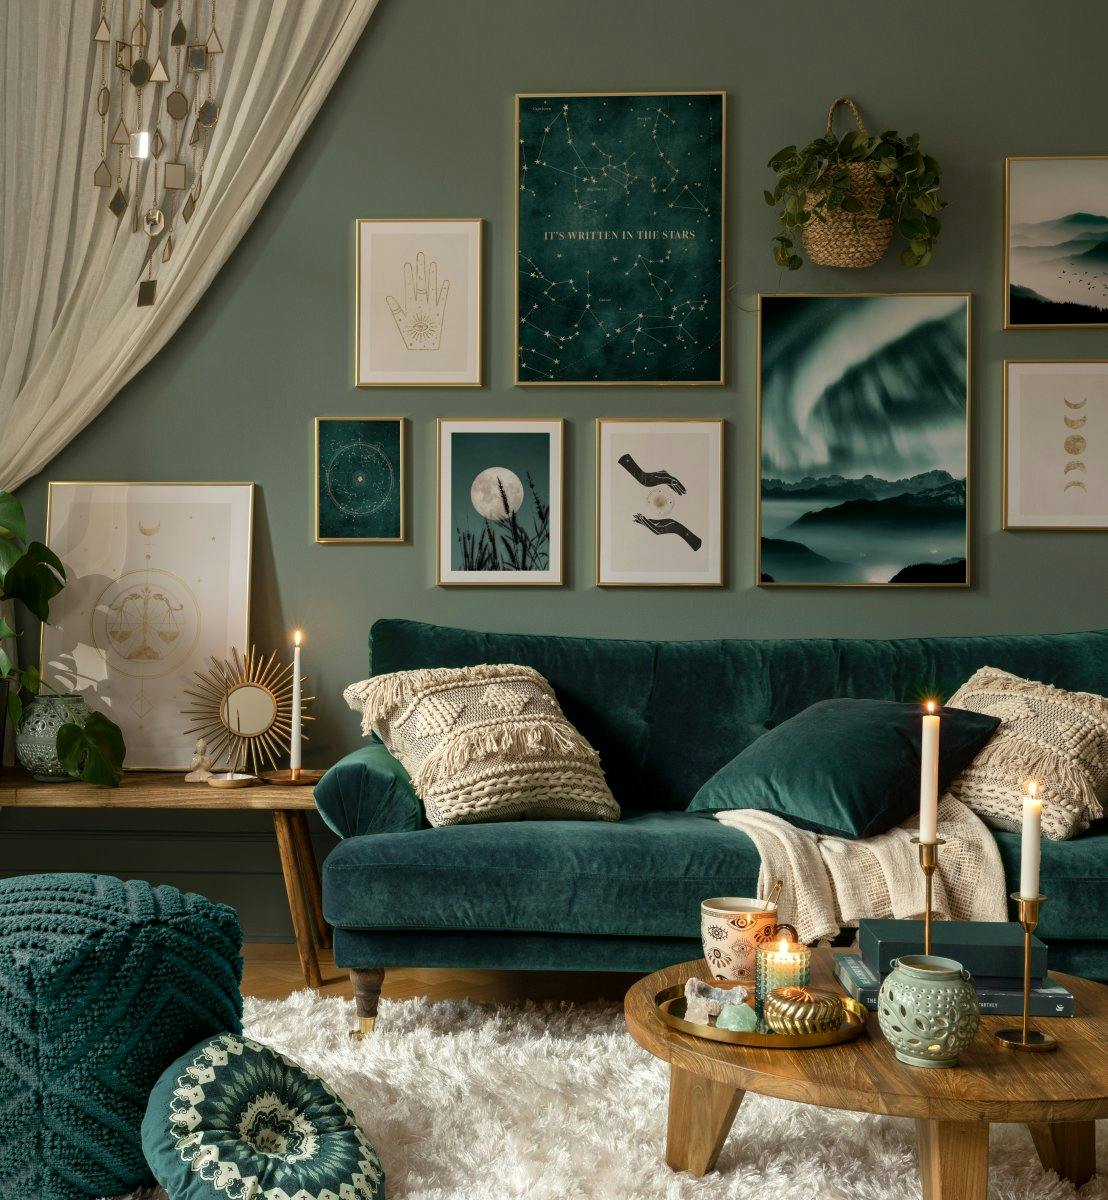 Smukke natur plakater og fotografier i blå farver til stuen